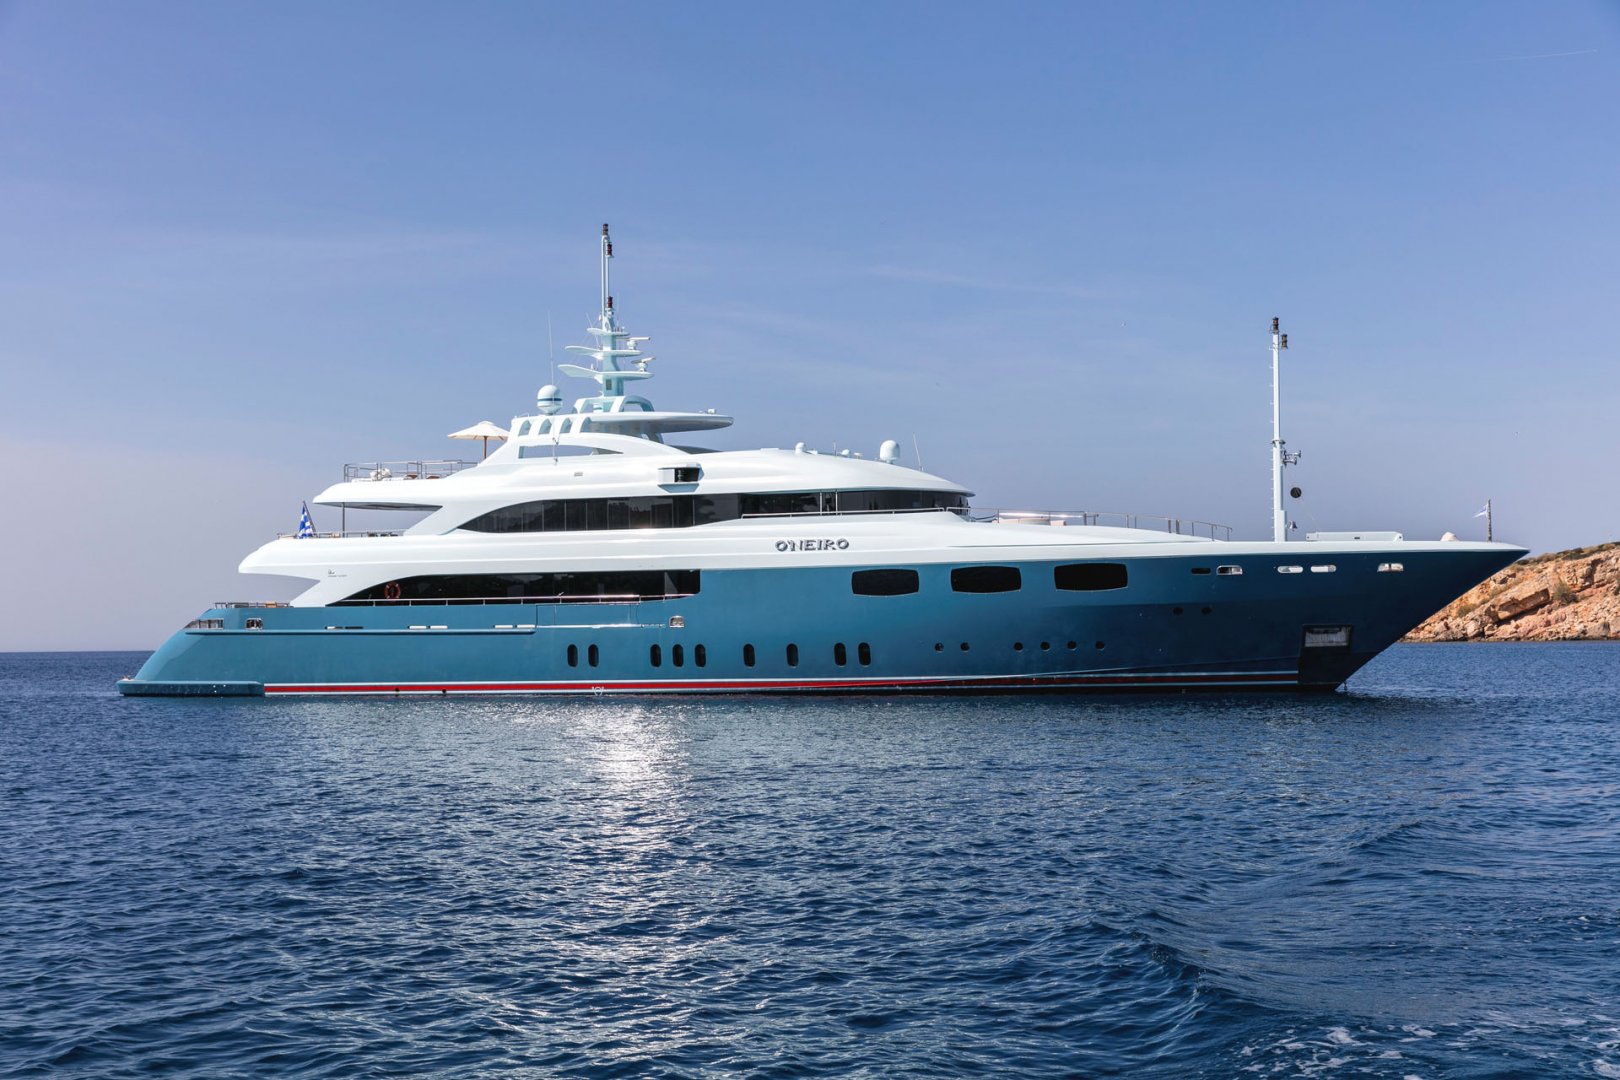 Luxury Yacht O'NEIRO